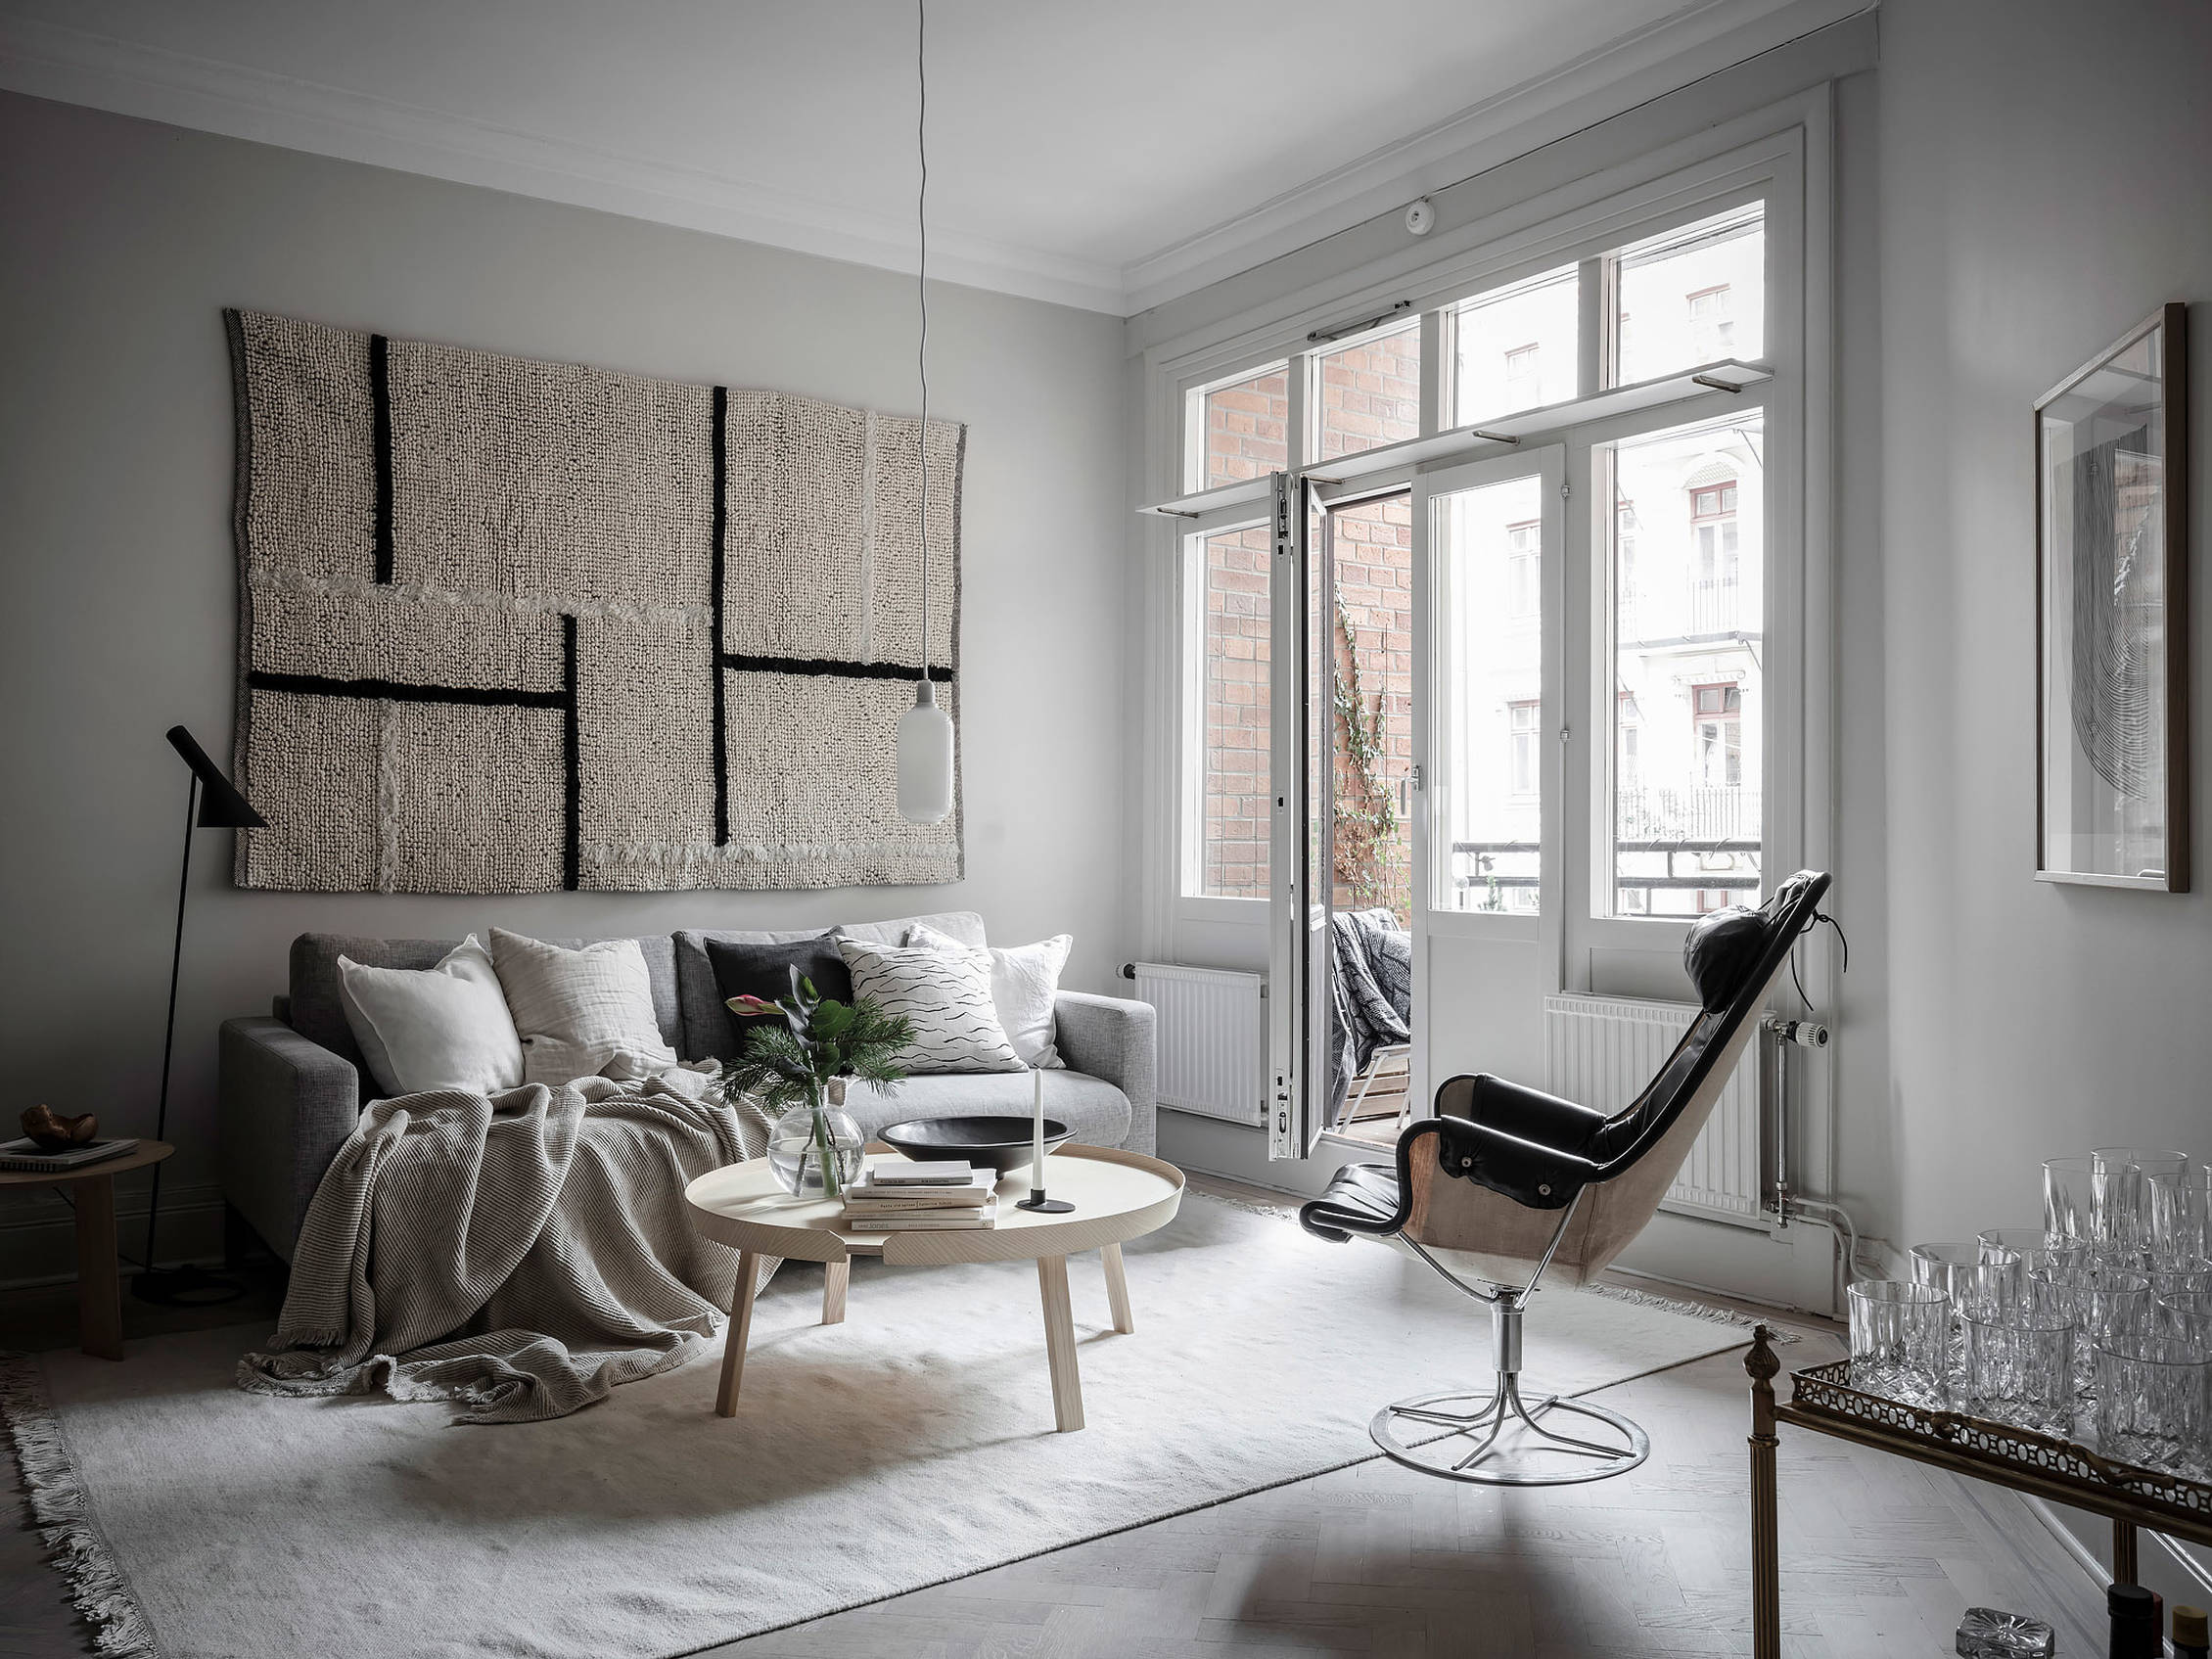 https://thegempicker.com/wp-content/uploads/2019/01/hanging-rug-living-room-wall-art-idea.jpeg